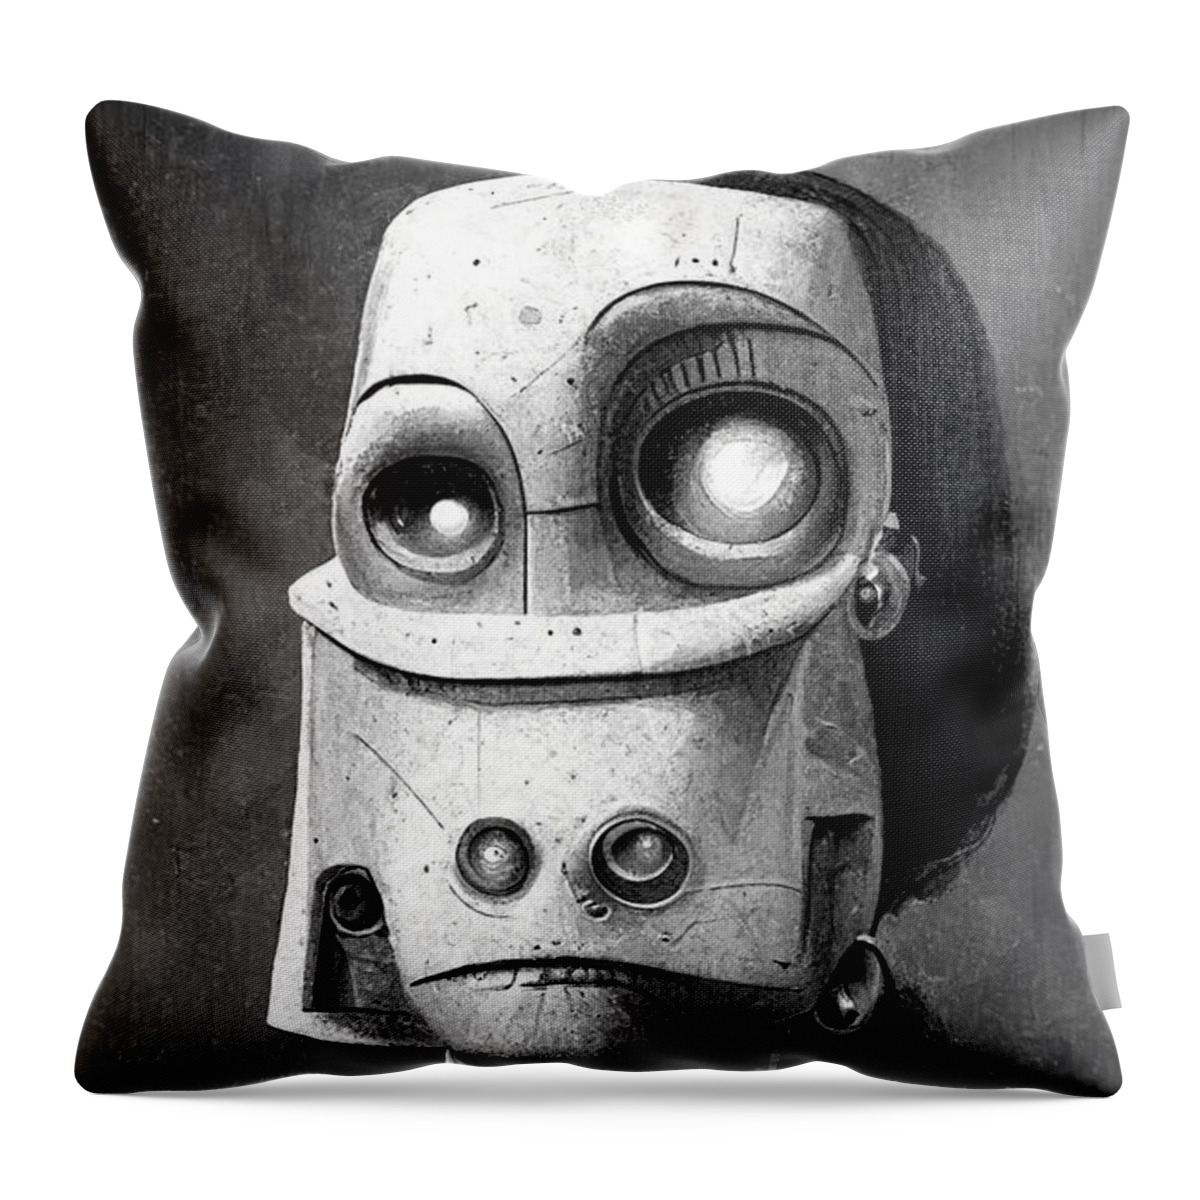 Robot Throw Pillow featuring the digital art Robot granny #2 by Sabantha